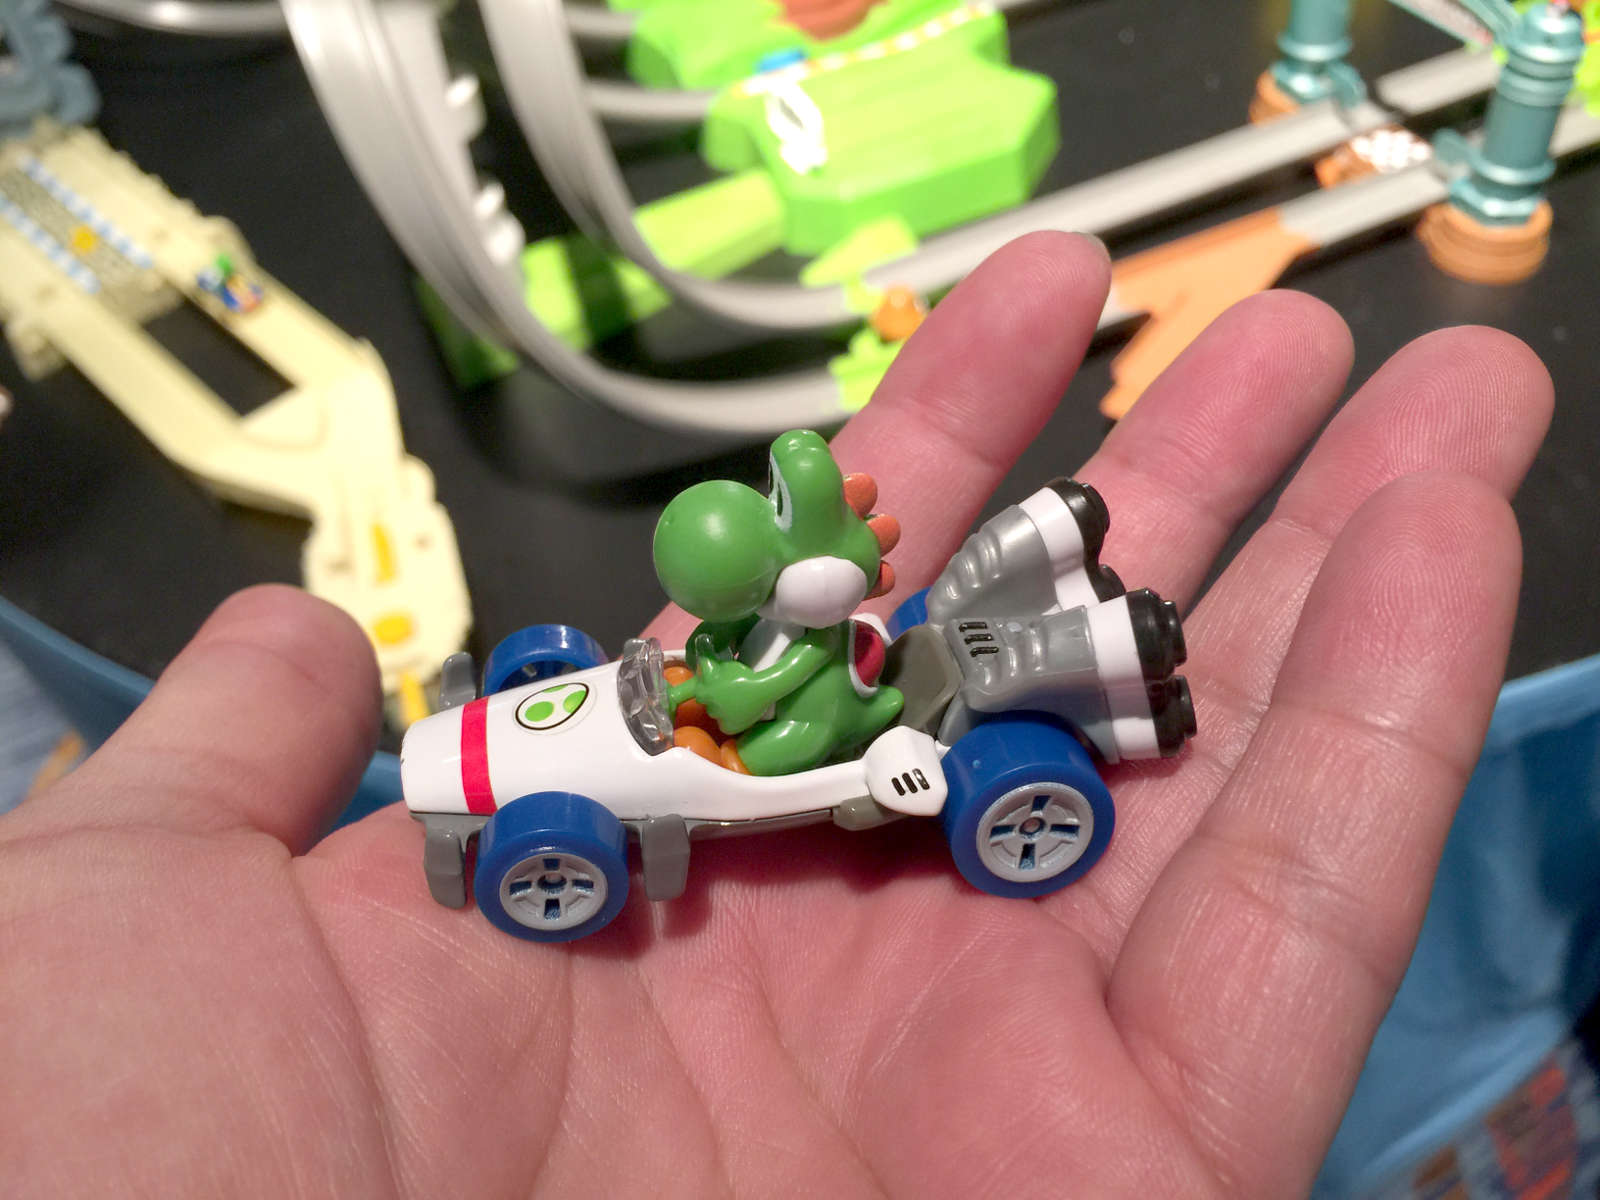 The Mario Kart Hot Wheels Are Great - FBTB